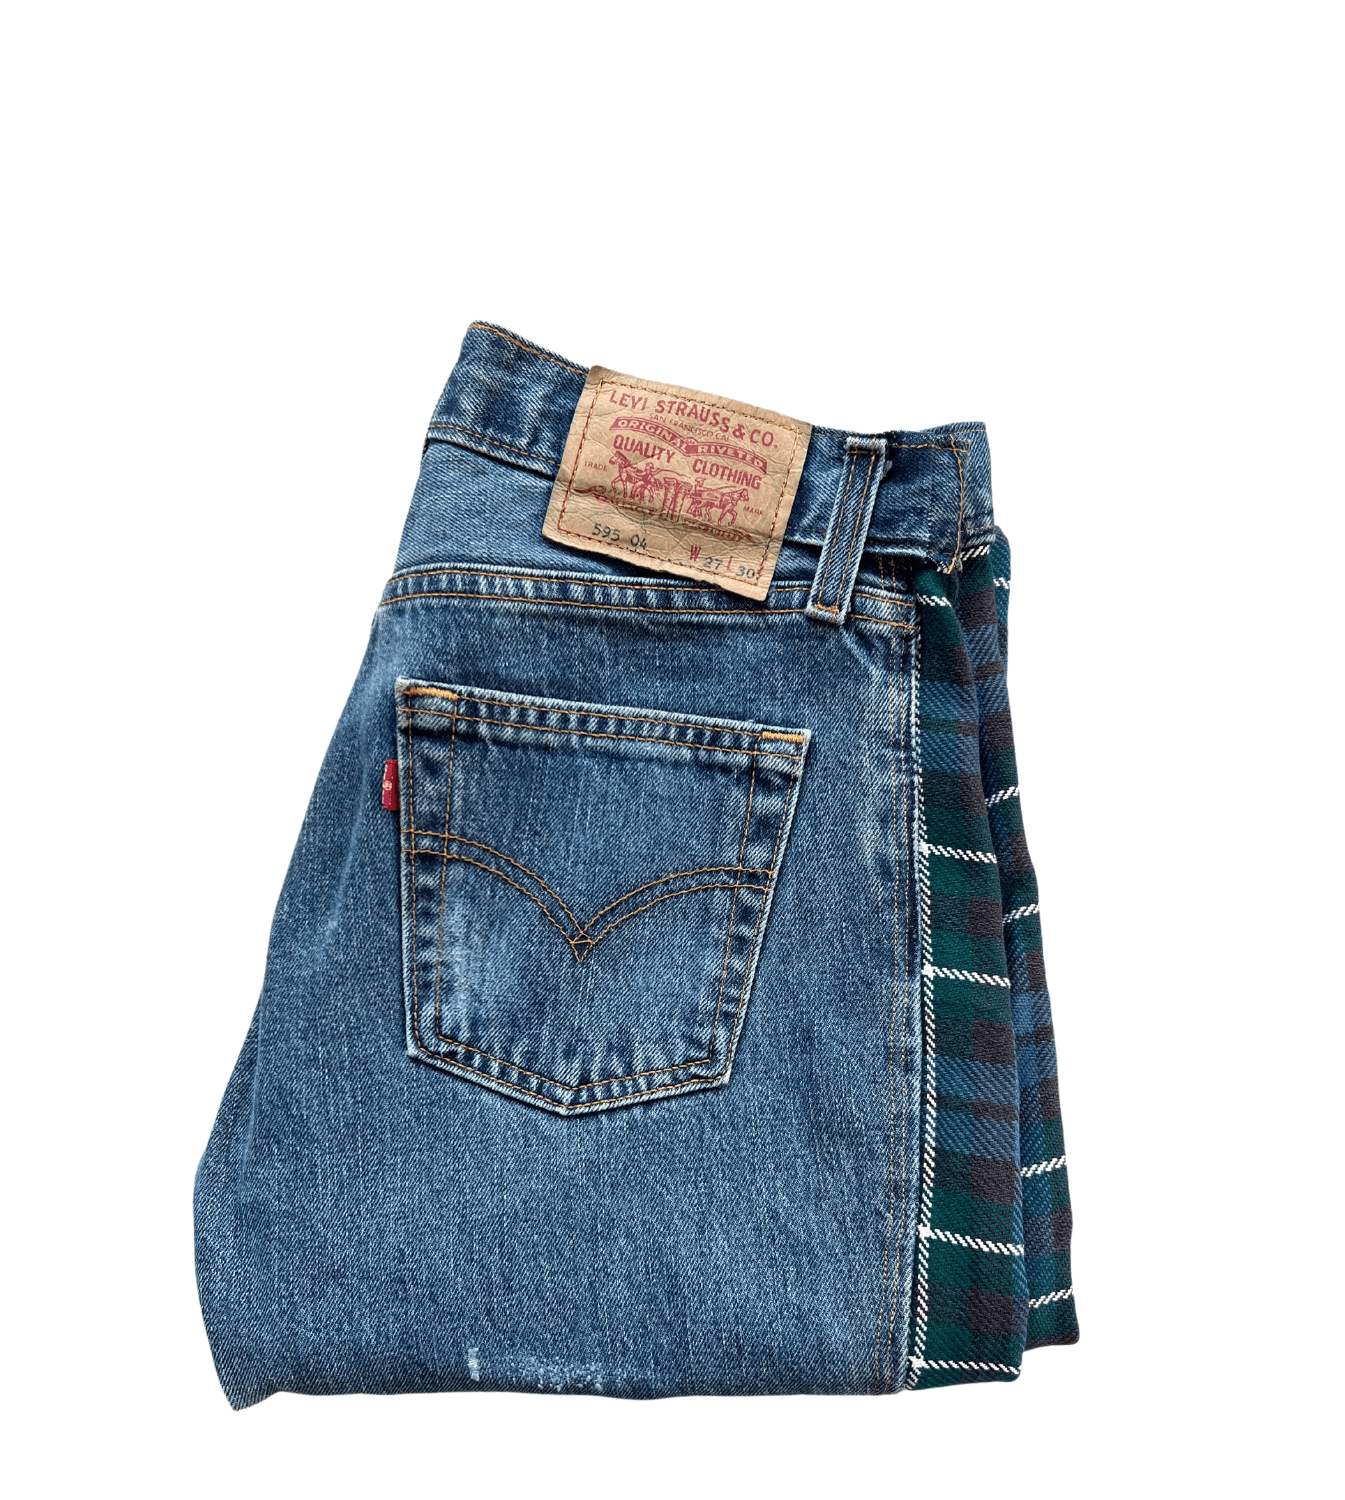 jeans-levis-rework-madeindijon-artisanat-poche-etiquette